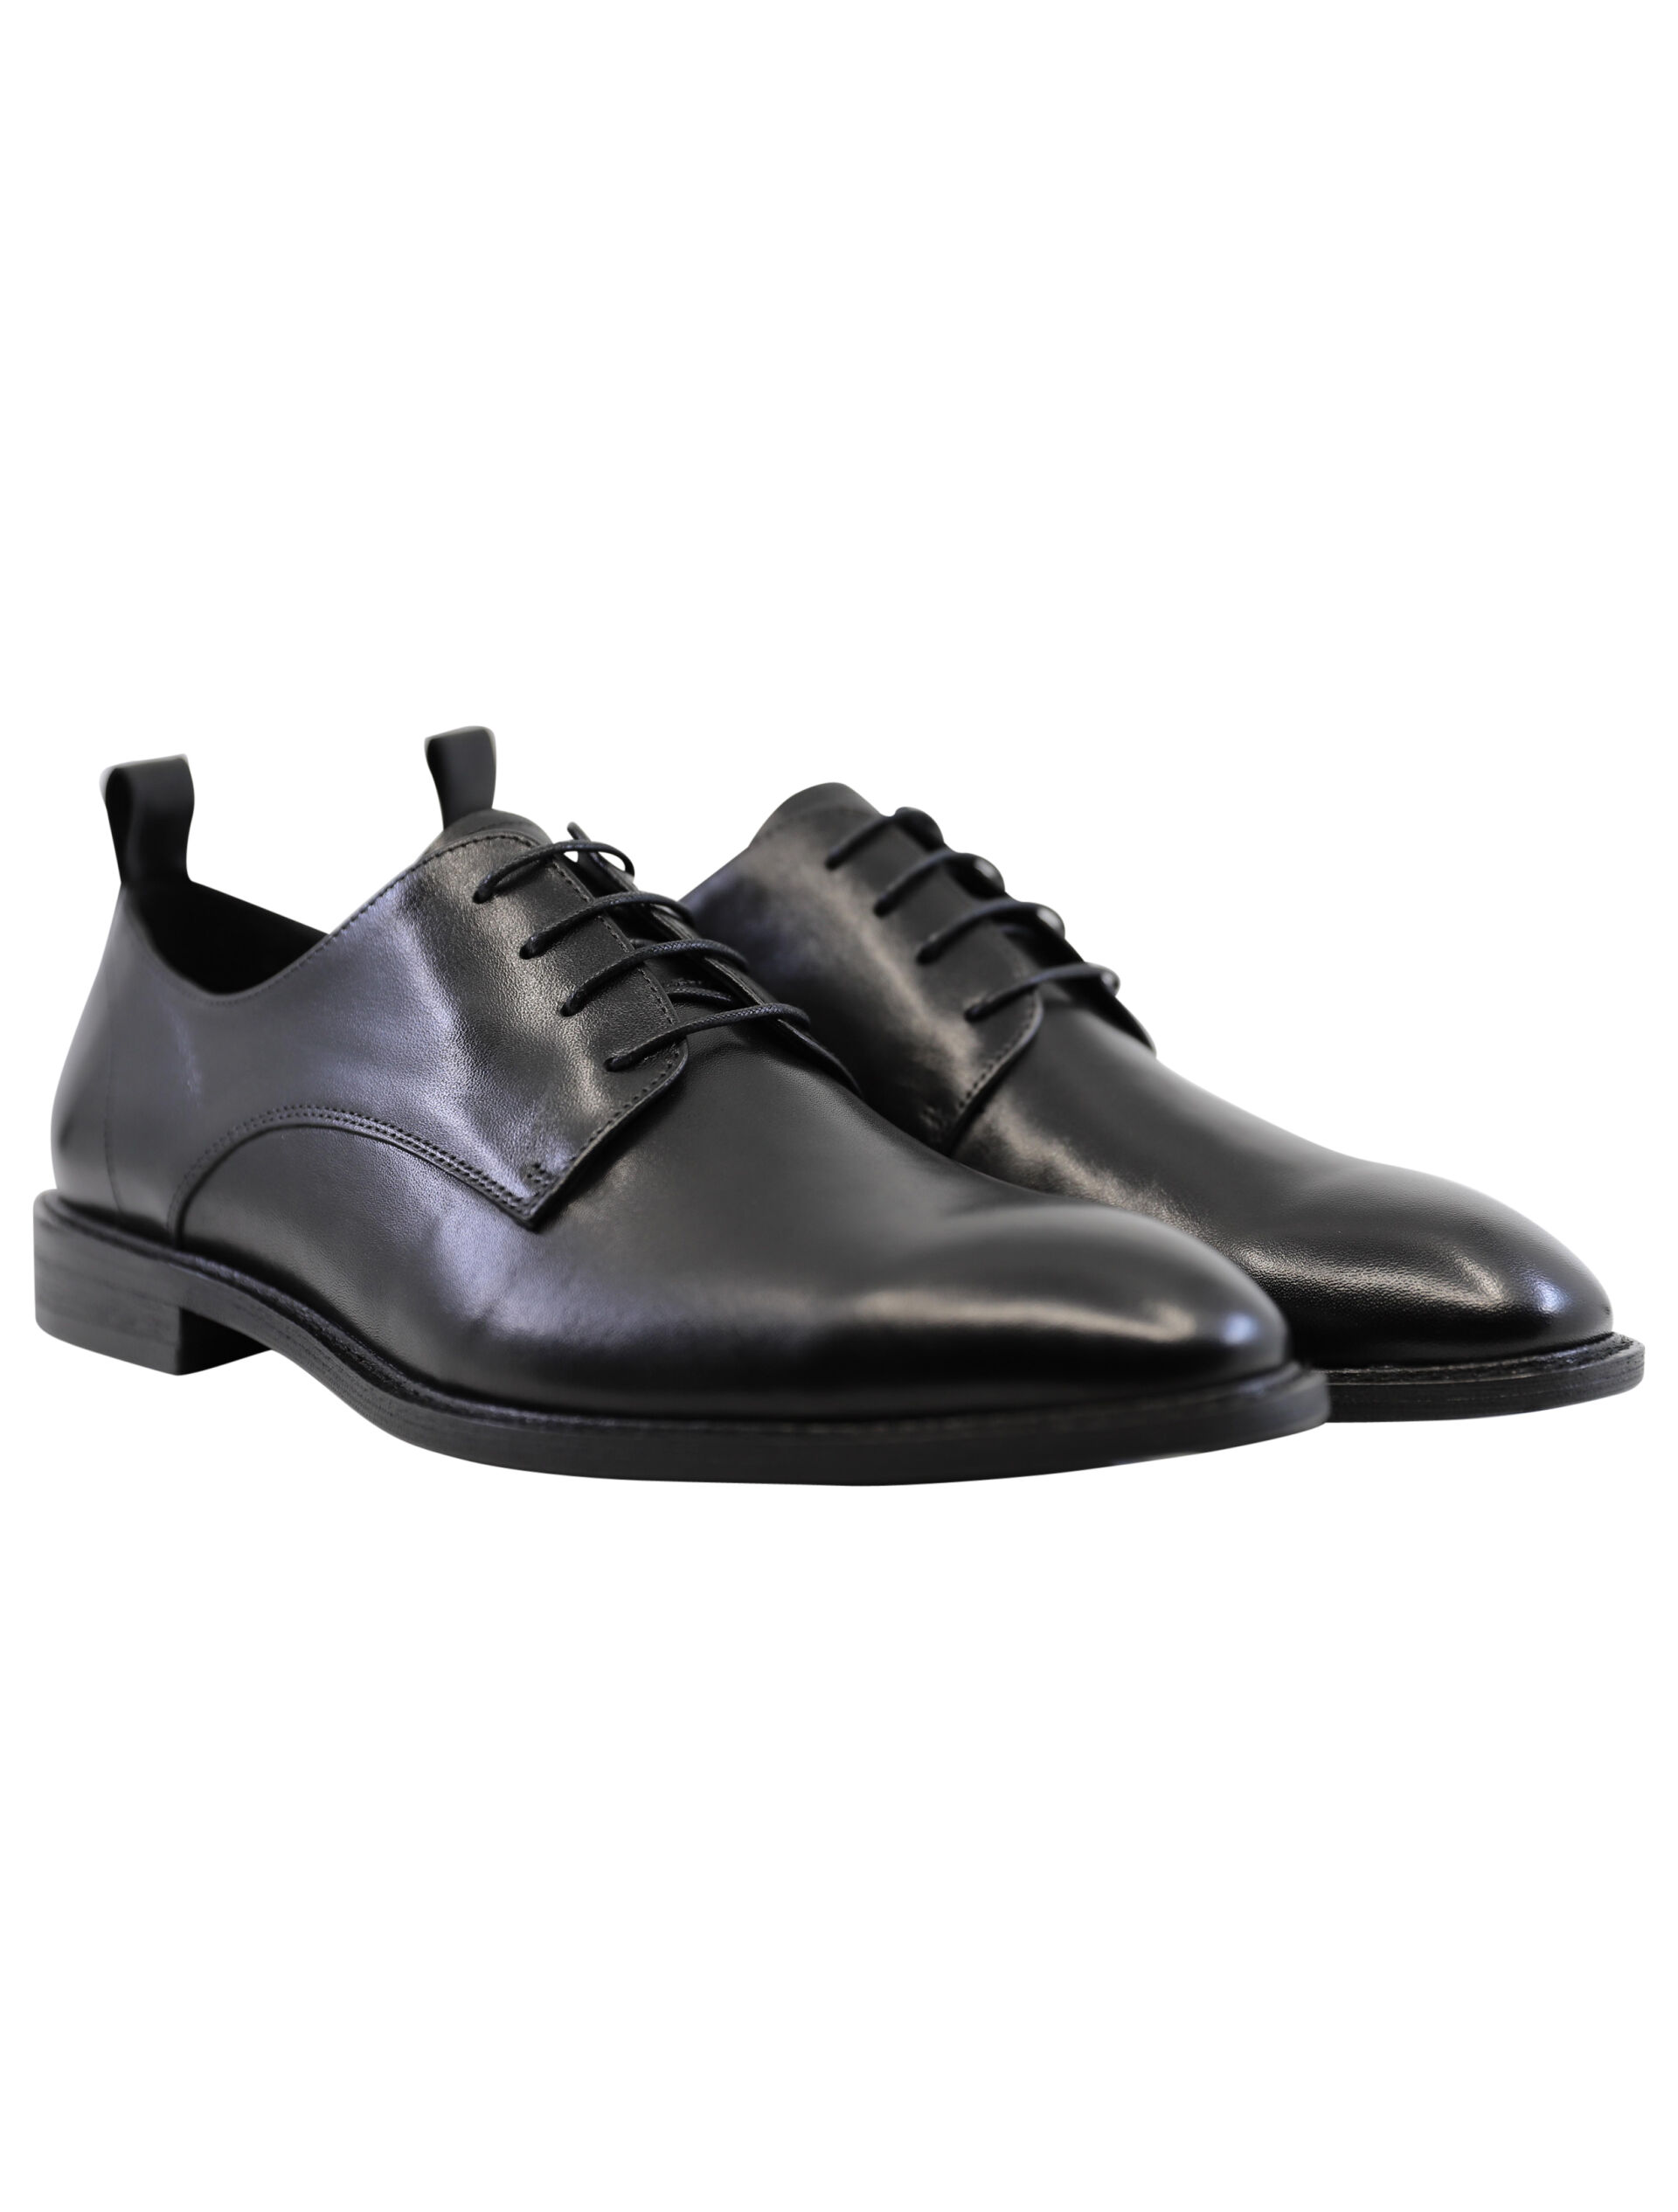 Business shoes Business shoes Black 30-992031